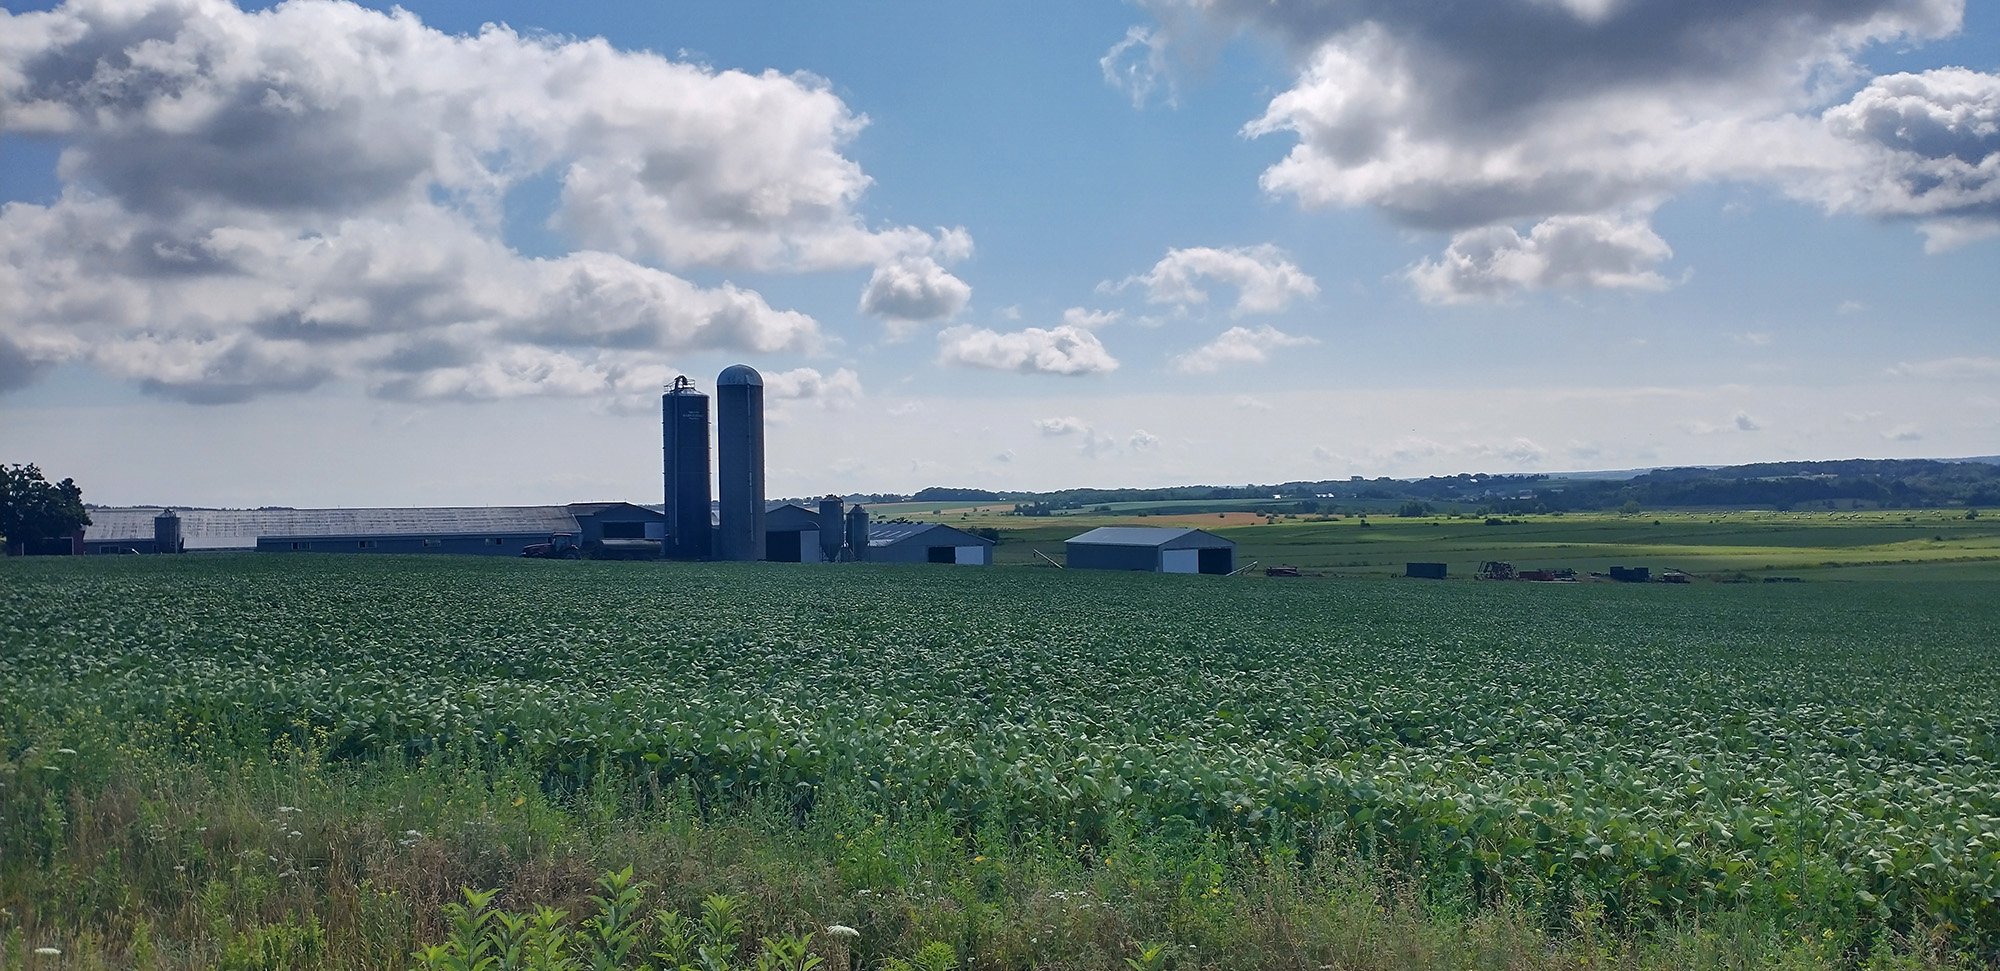 The inland of Nova Scotia has tons of scenic farmlands.